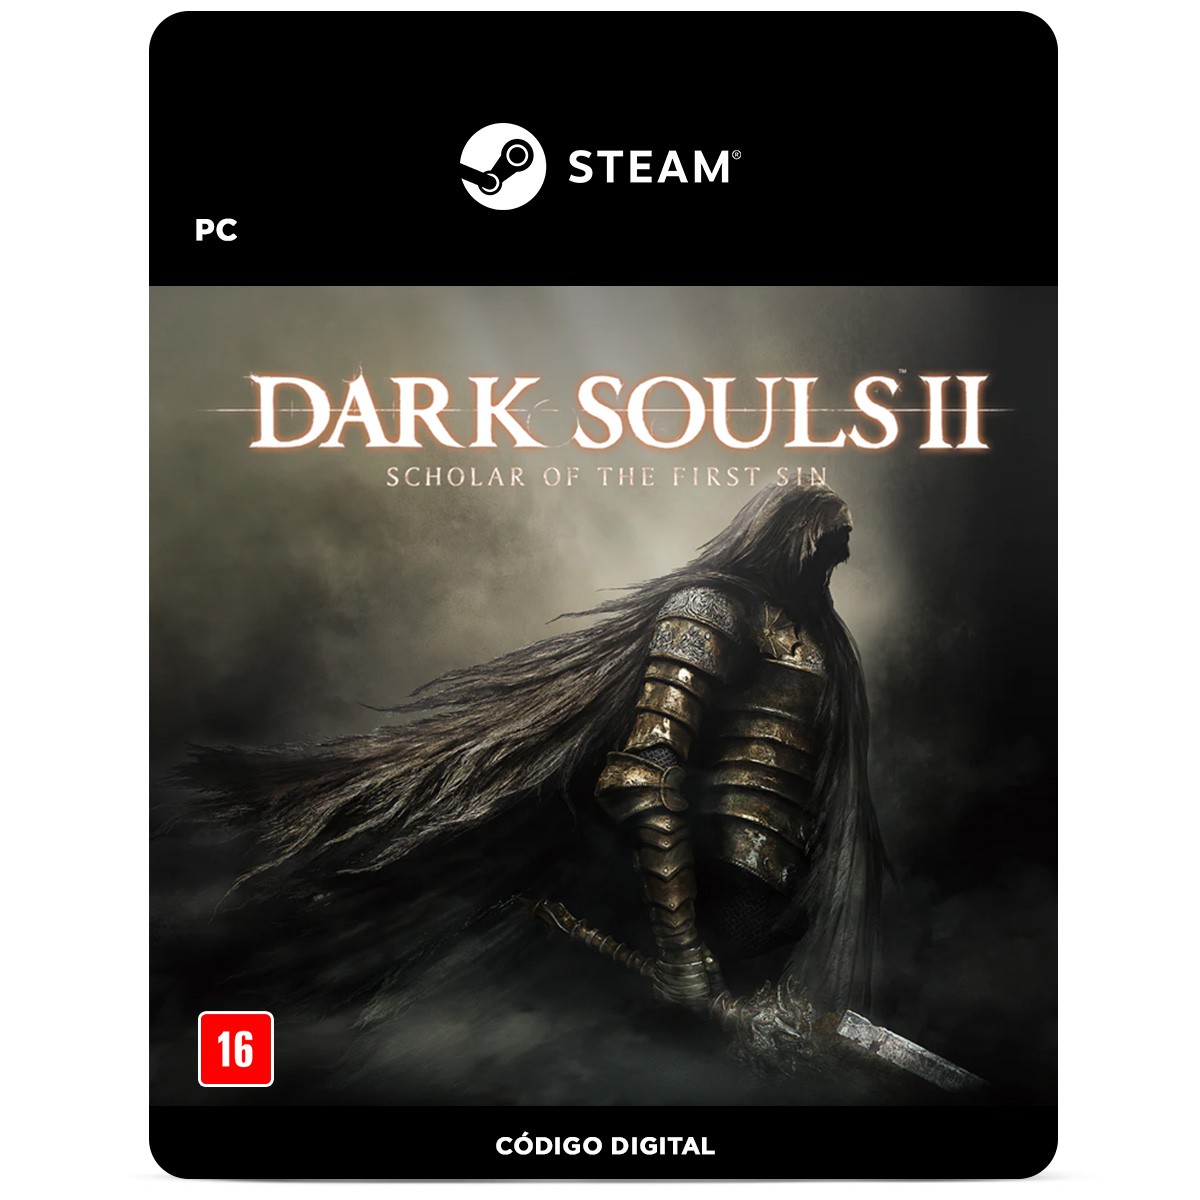 DARK SOULS™ II: Scholar of the First Sin, PC Steam Game